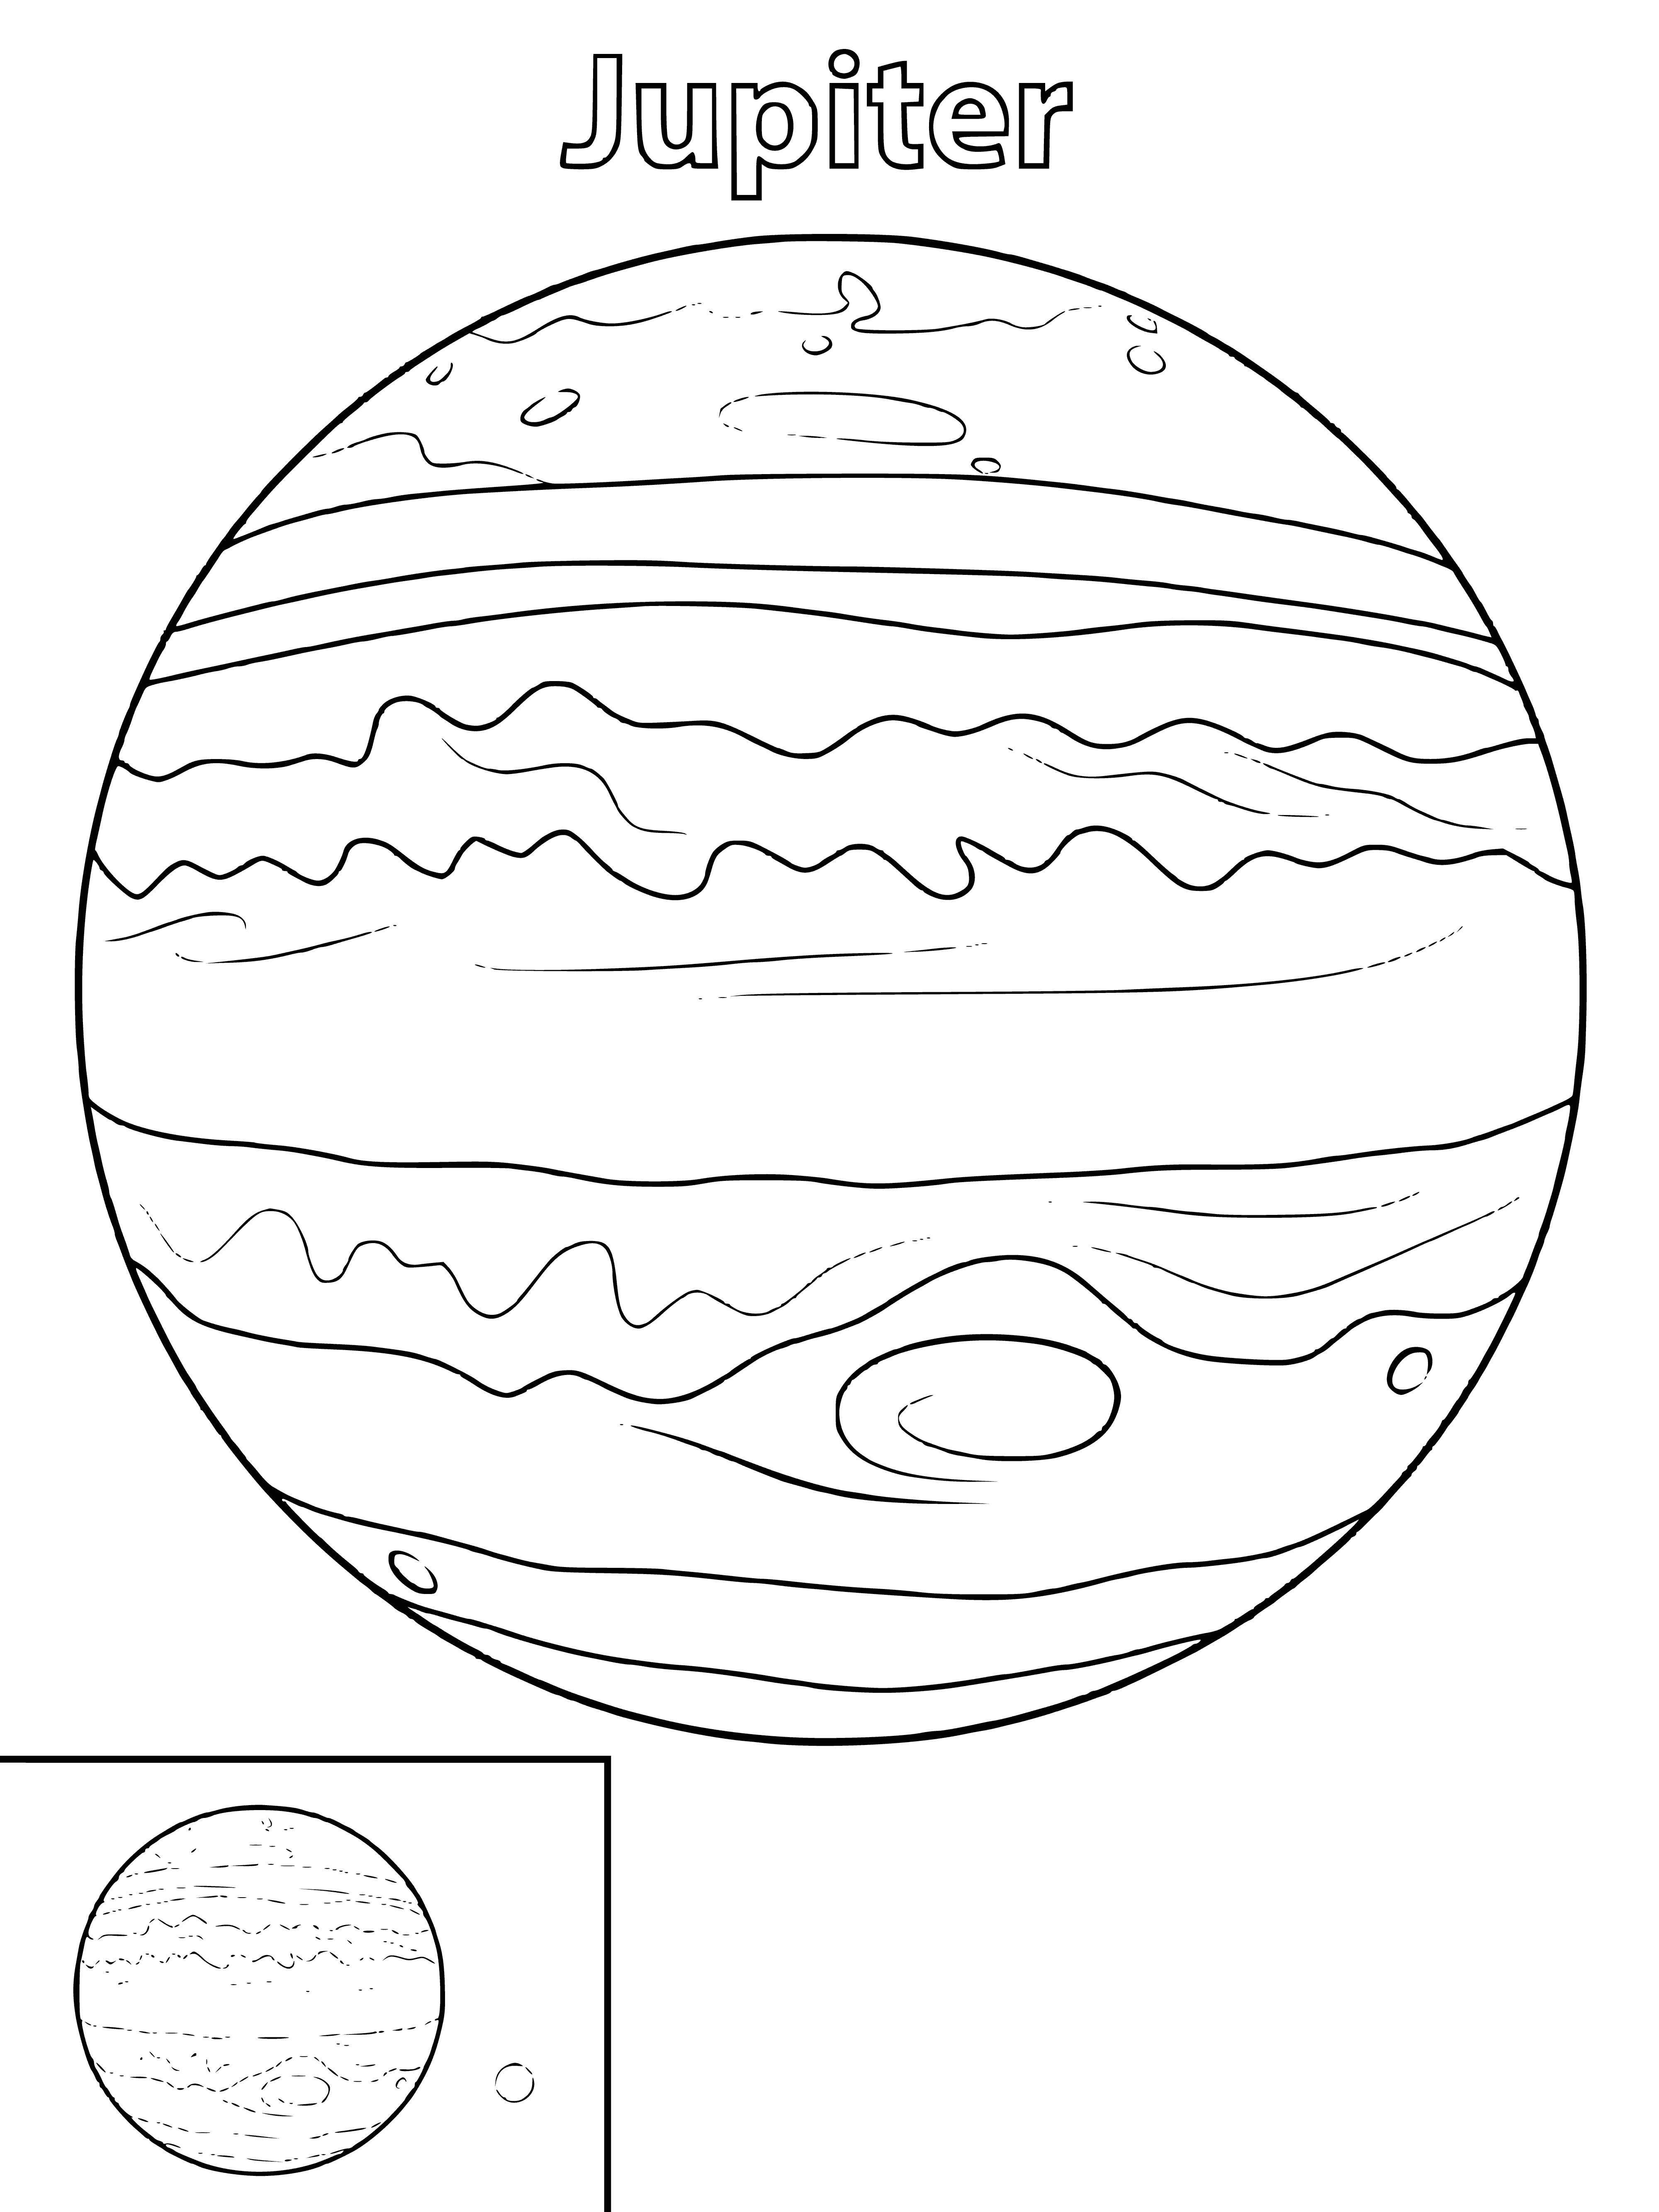 Planet Jupiter coloring page